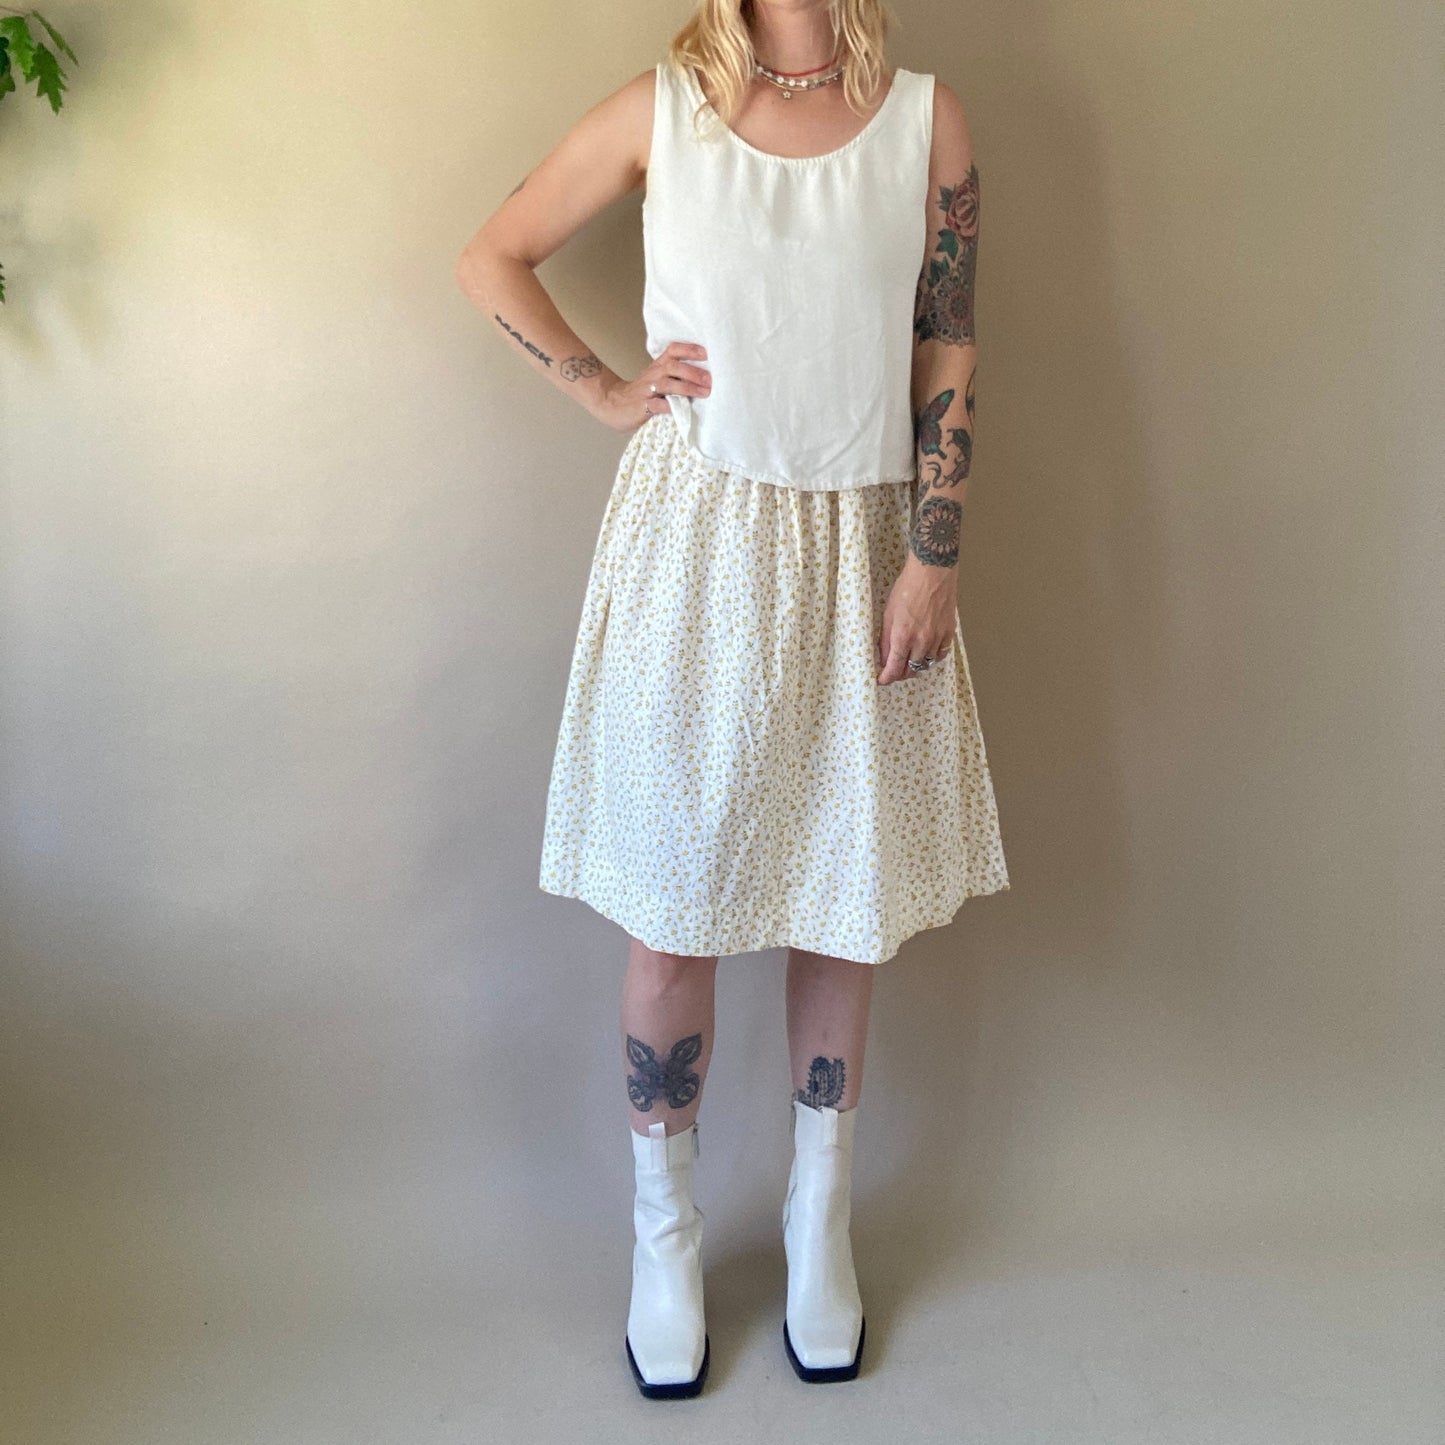 Vintage 60s cotton floral circle skirt - 1960s simple hippy flower skirt - 60s vintage boho floral skirt